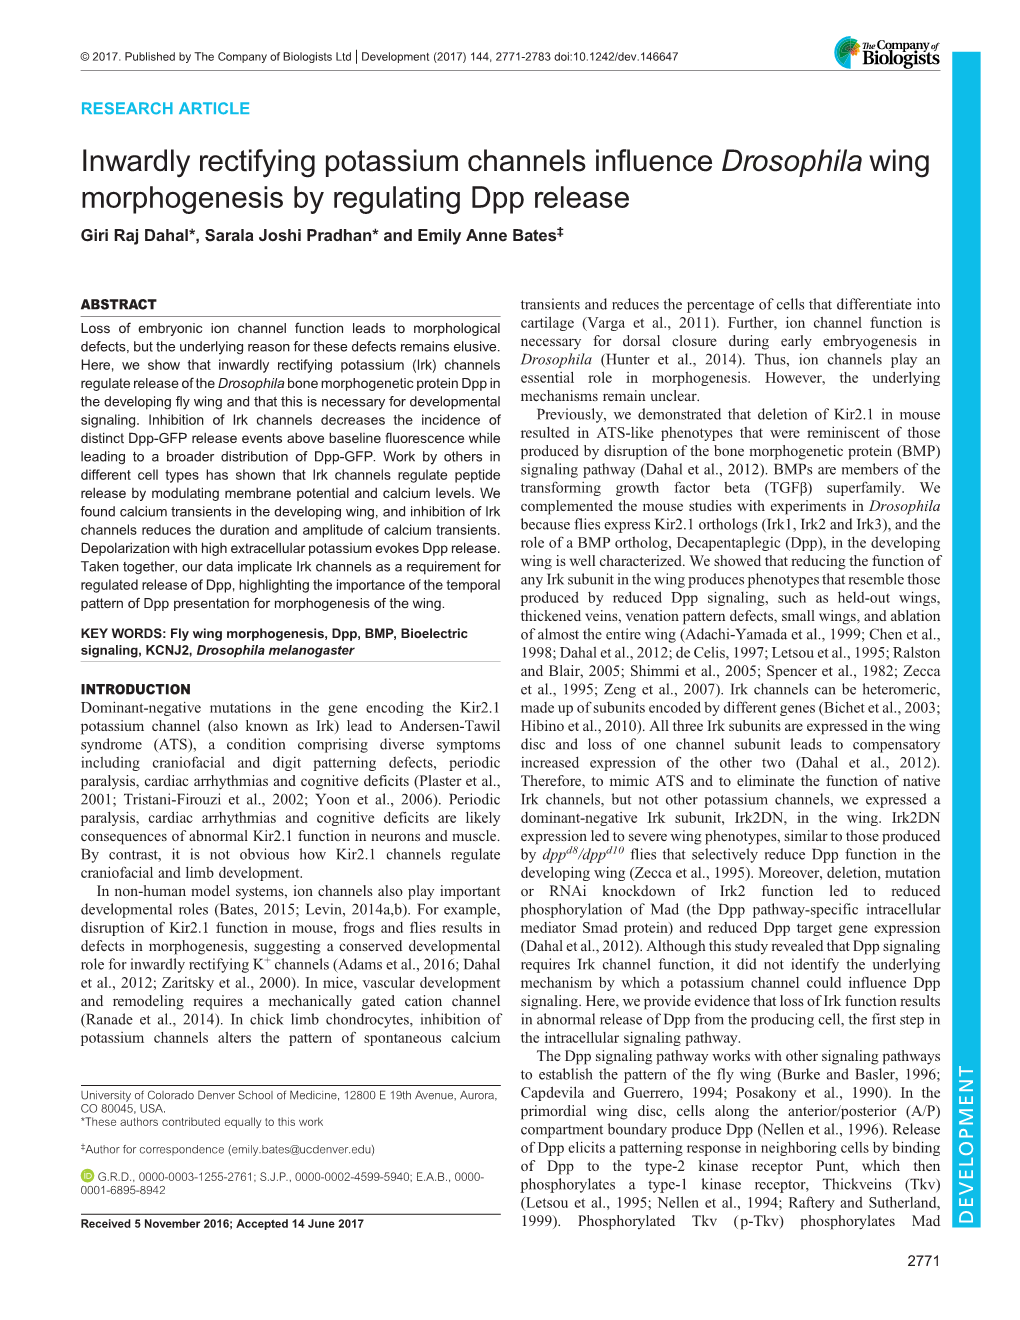 Inwardly Rectifying Potassium Channels Influence Drosophila Wing Morphogenesis by Regulating Dpp Release Giri Raj Dahal*, Sarala Joshi Pradhan* and Emily Anne Bates‡